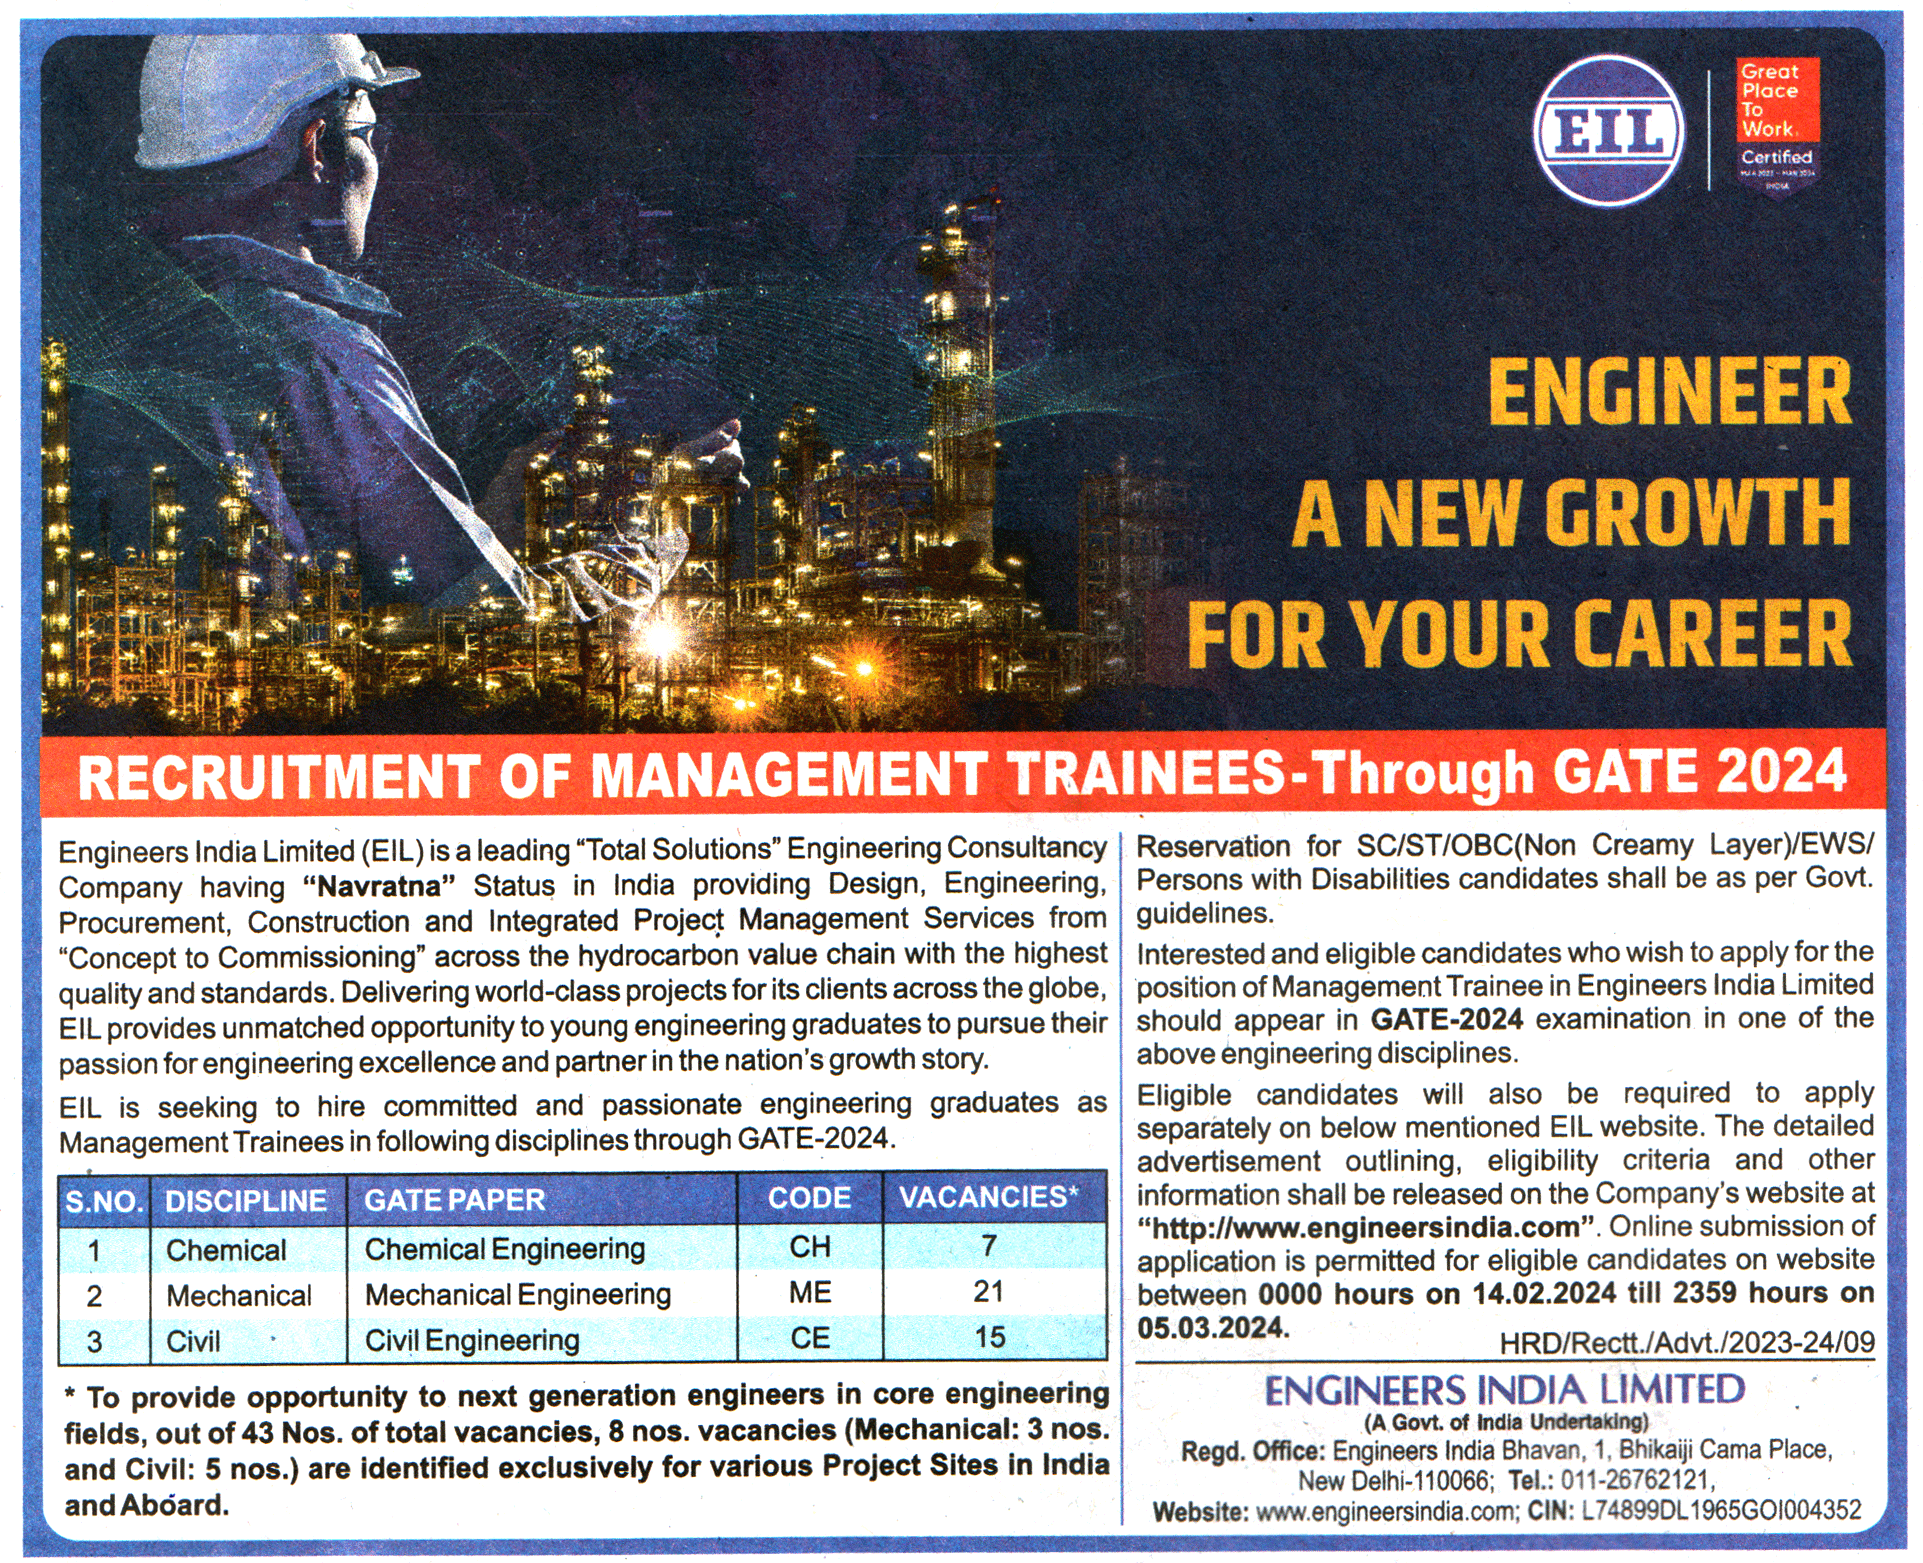 Engineers India Limited (EIL) New Delhi Recruitment